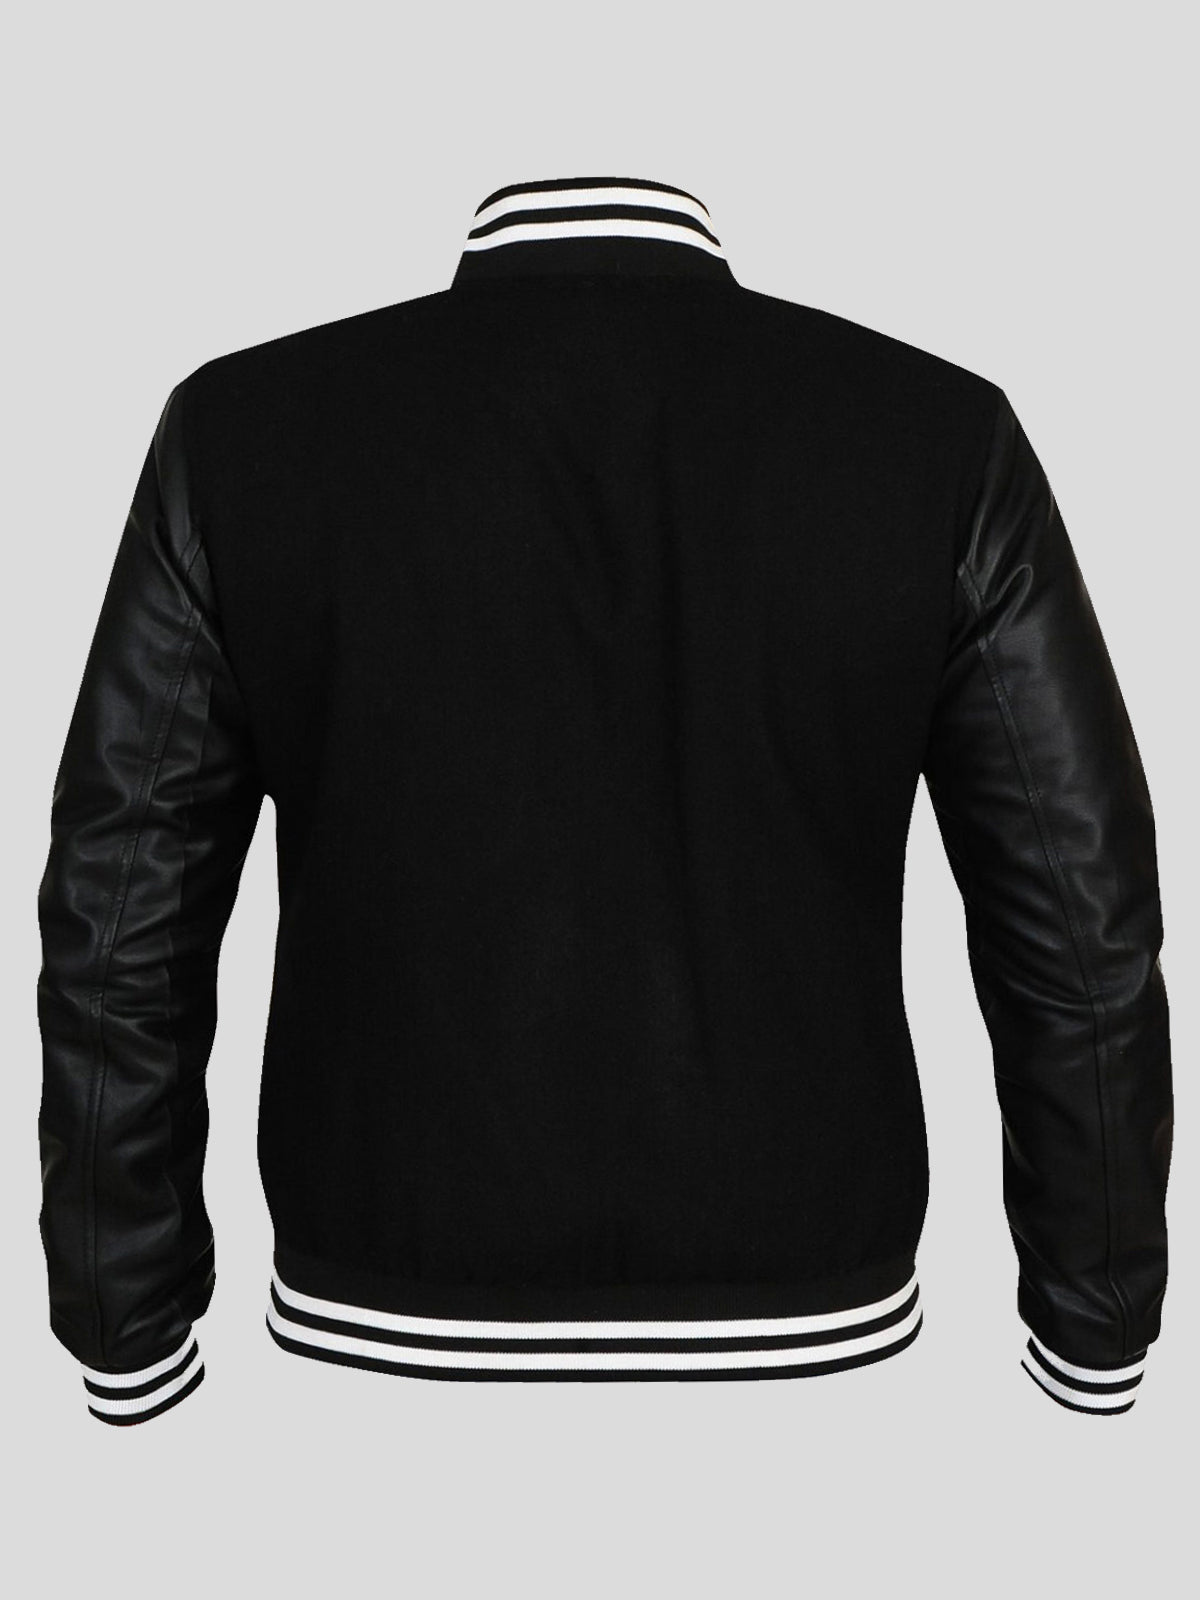 Men's Captivating Deep-Black Varsity Jacket